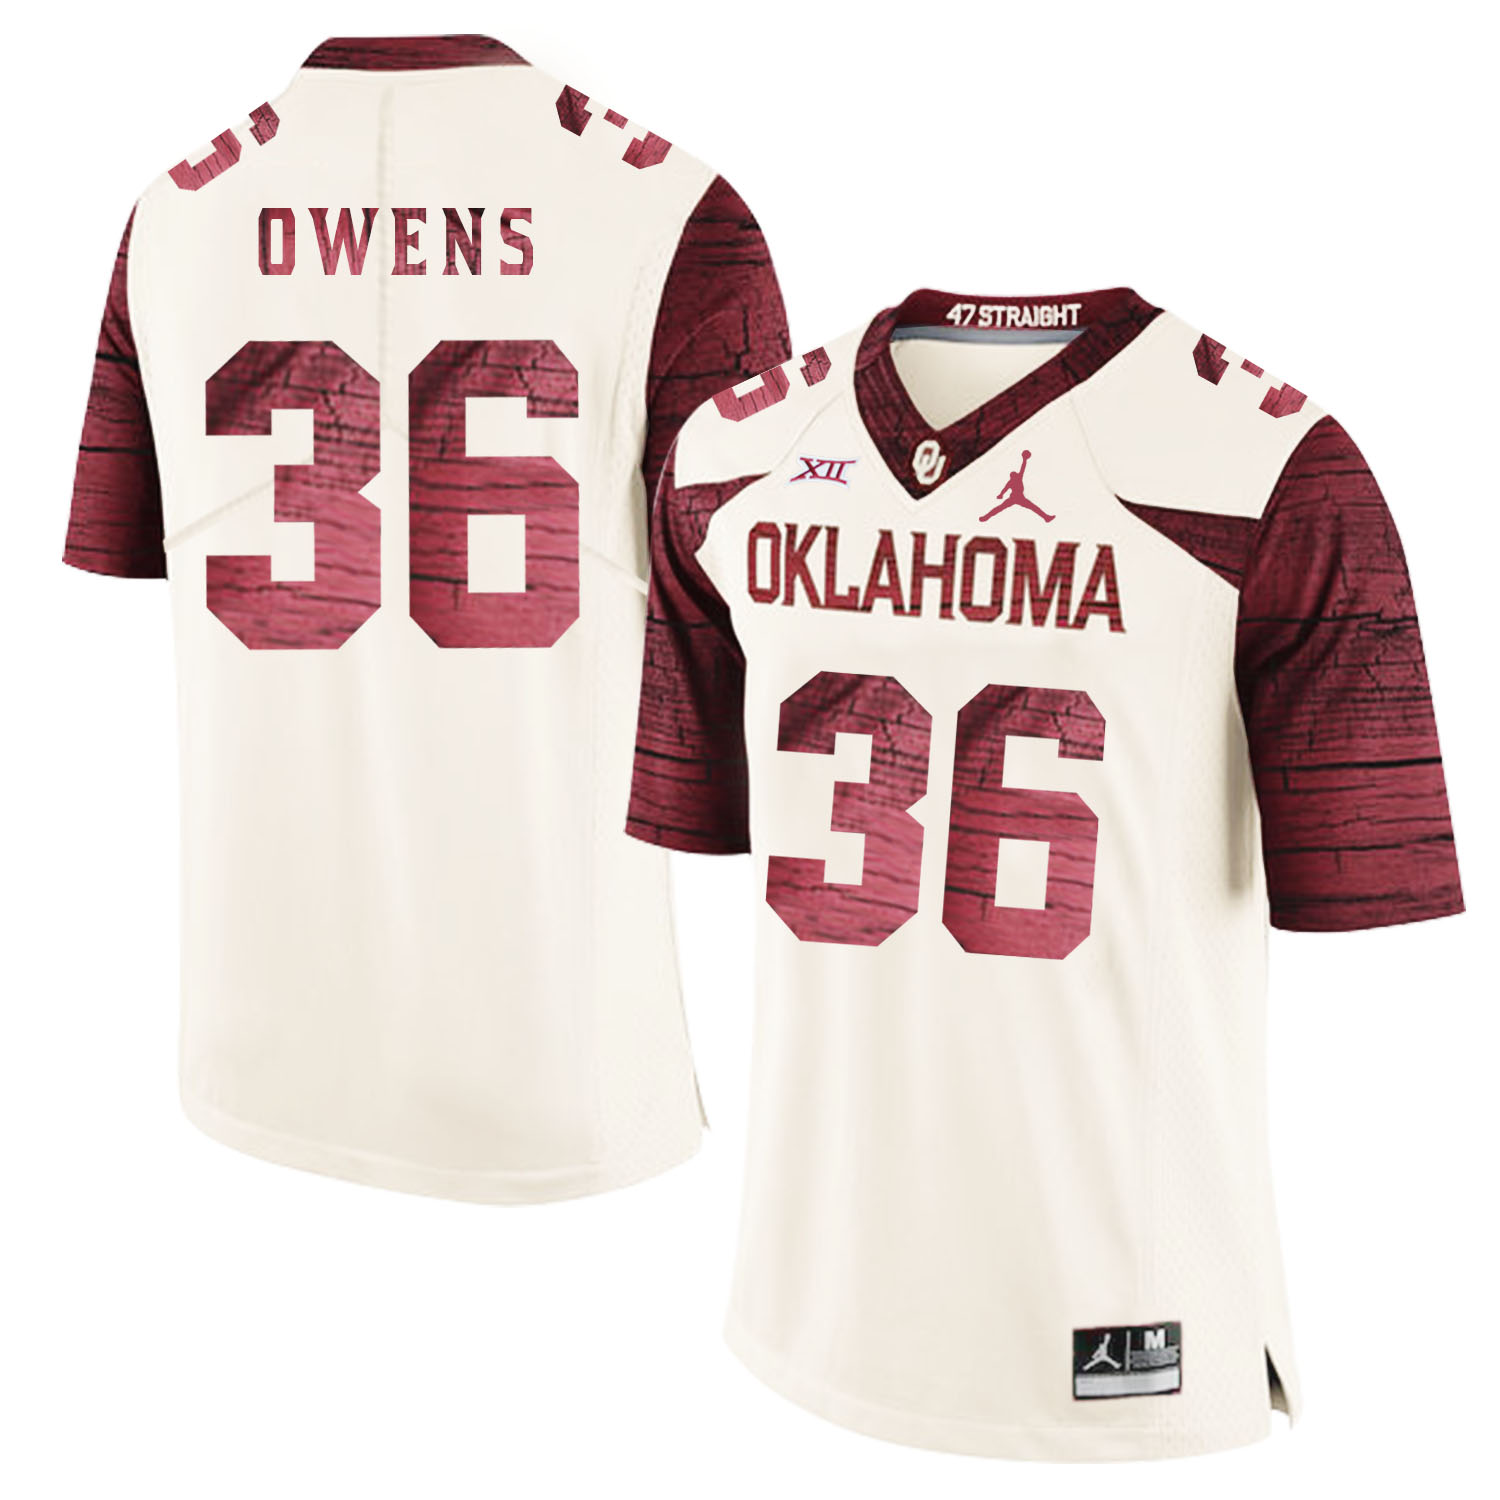 Oklahoma Sooners 36 Steve Owens White 47 Game Winning Streak College Football Jersey